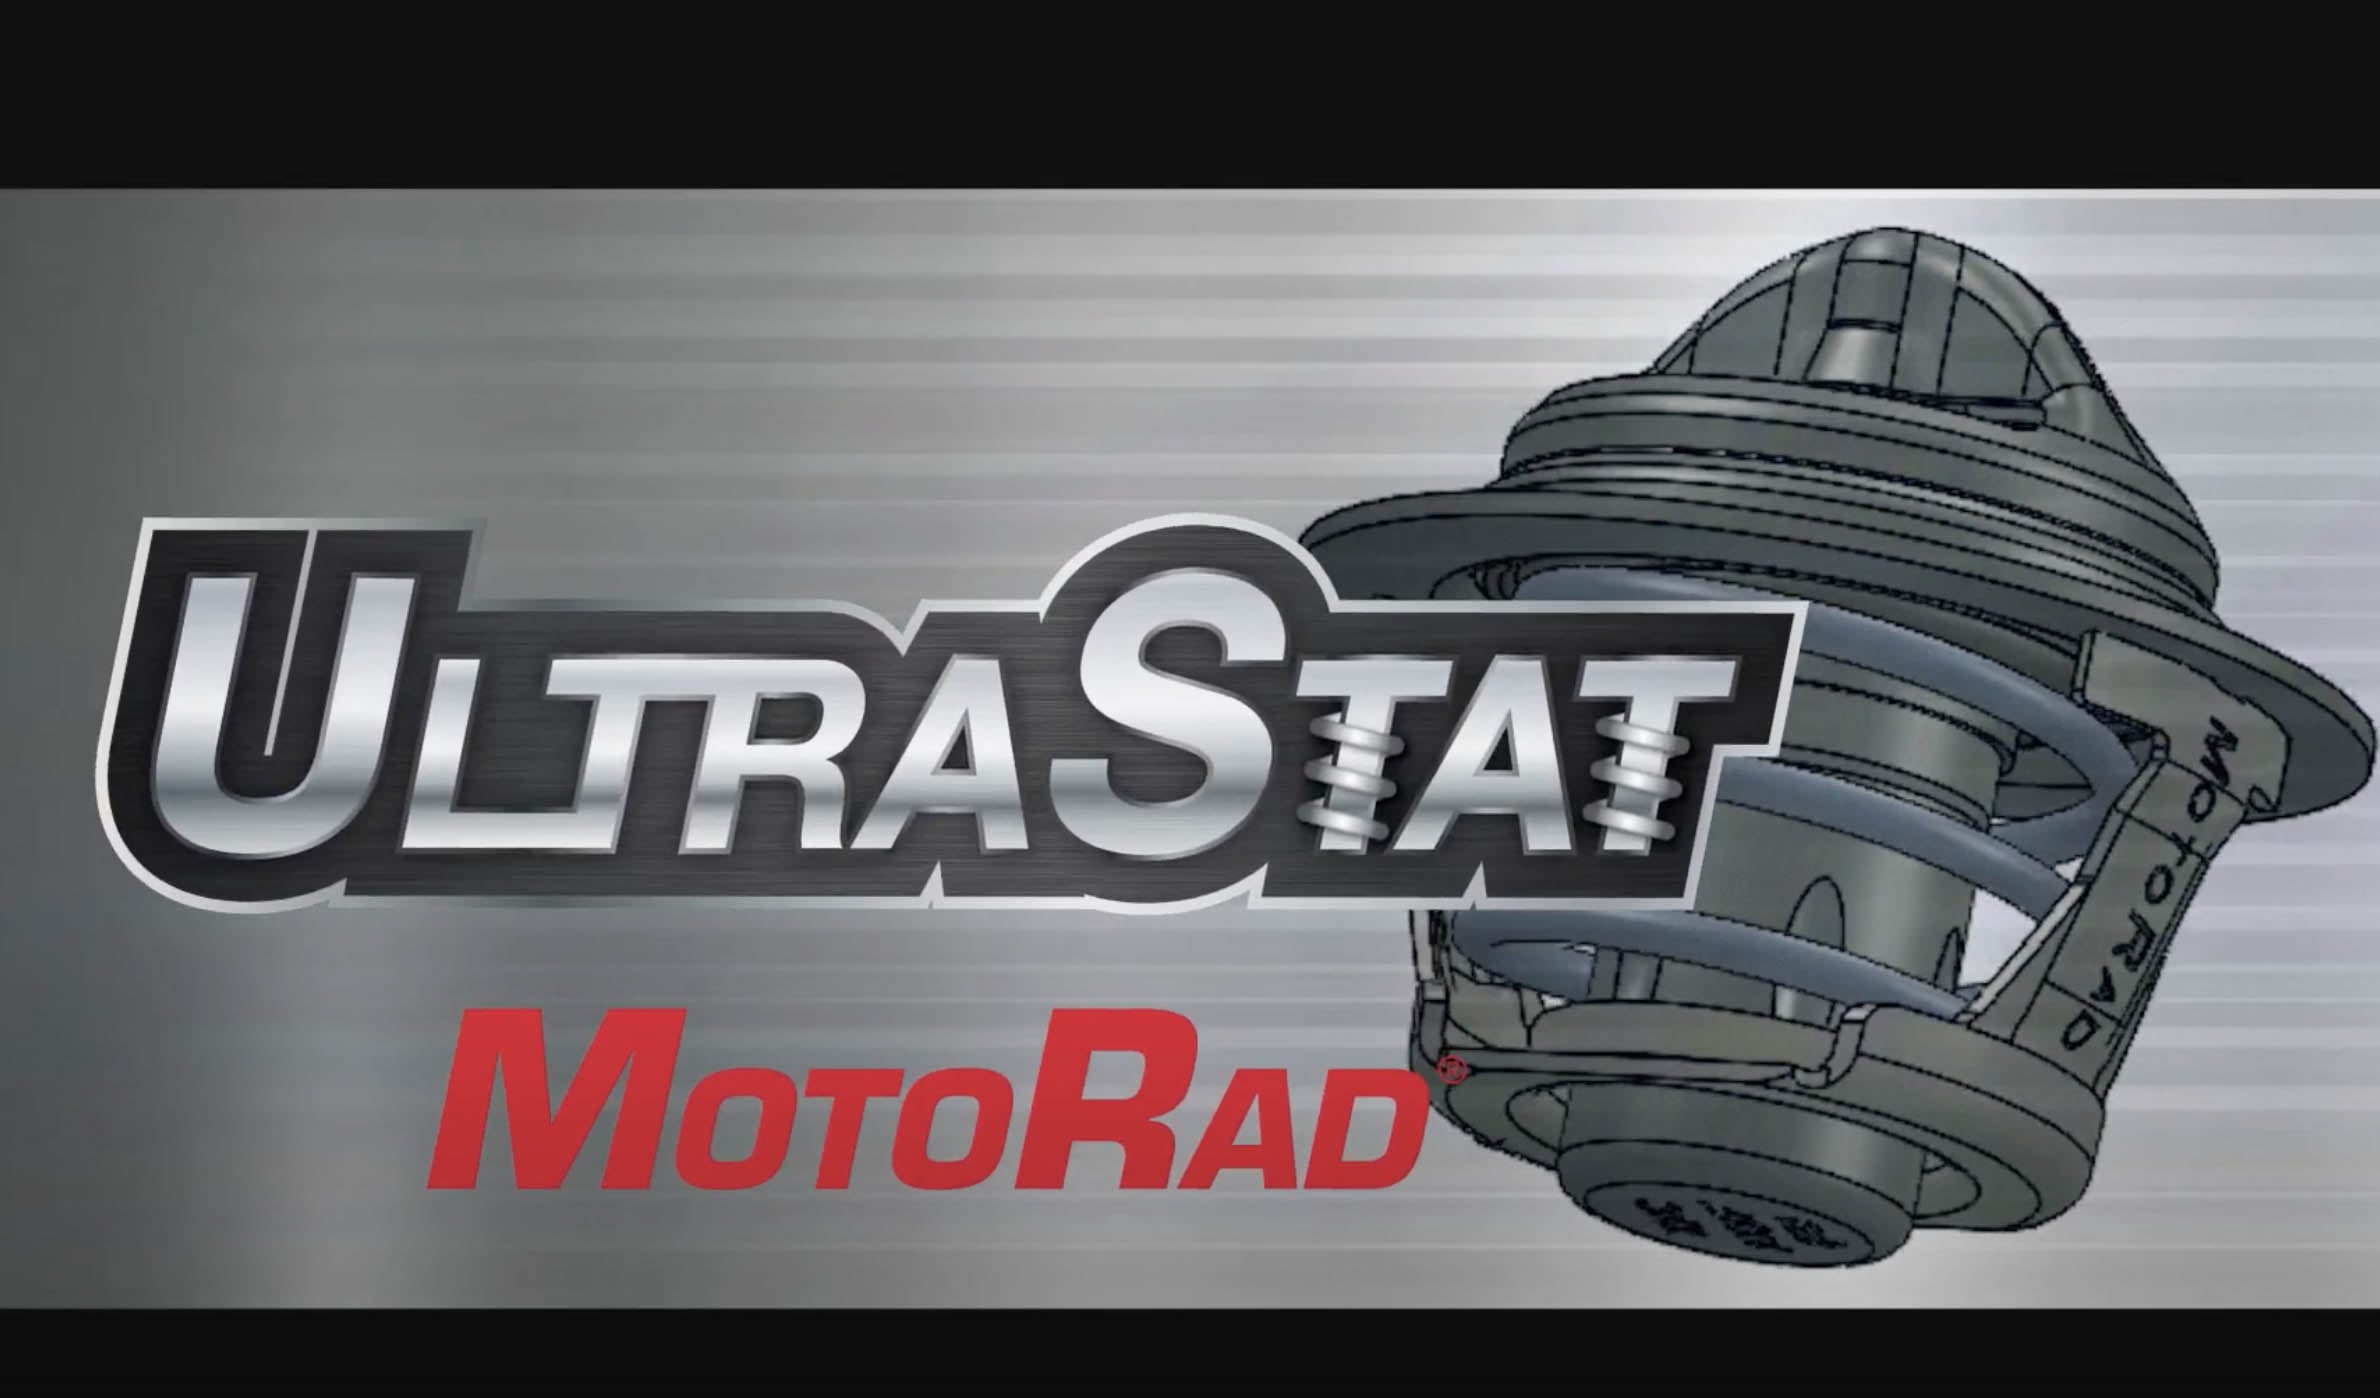 MotoRad UltraStat – Video Overview